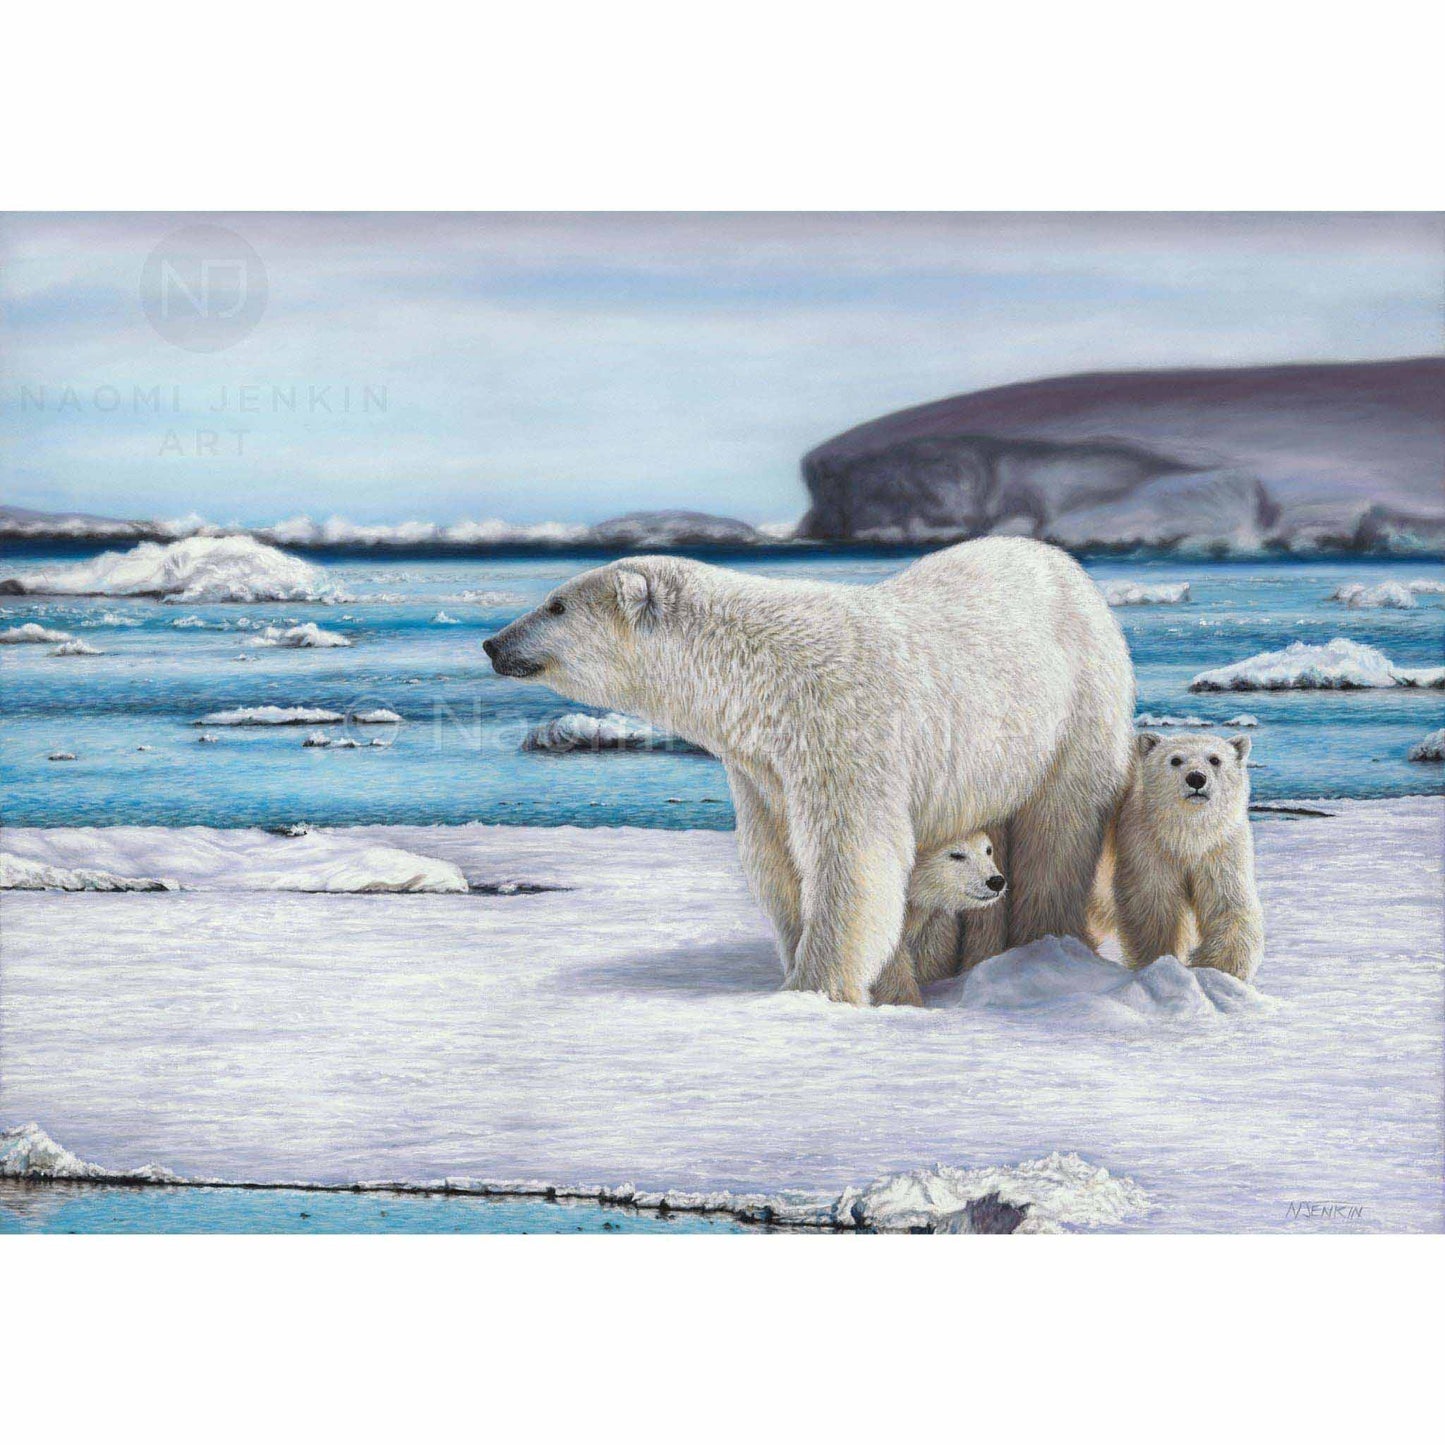 Painting print of a polar bear family by wildlife artist Naomi Jenkin